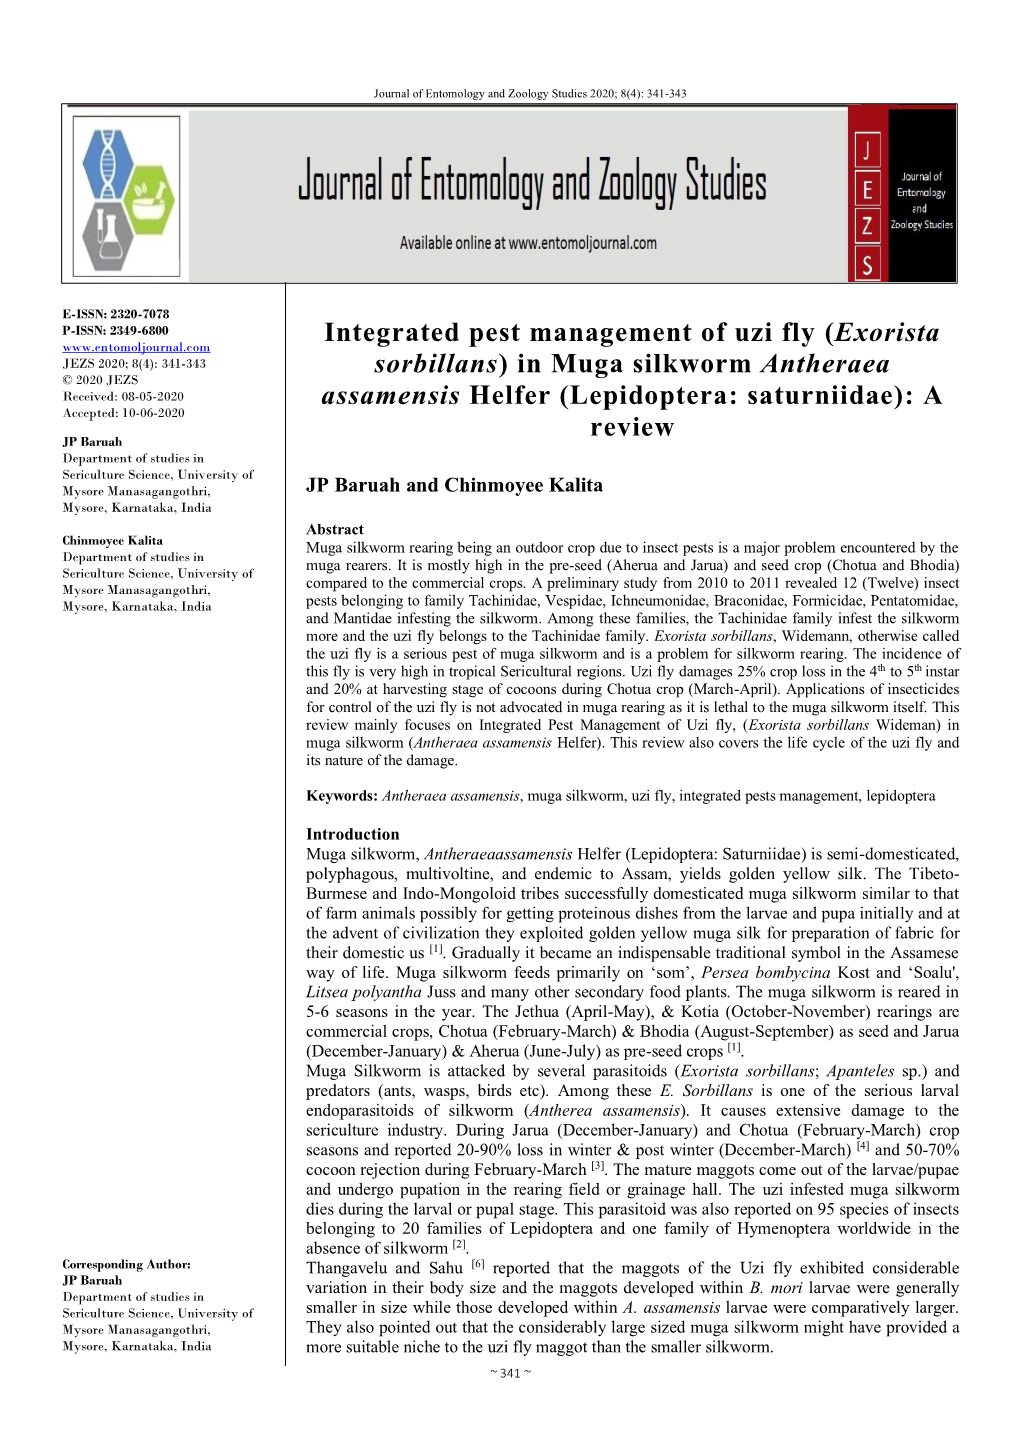 Integrated Pest Management of Uzi Fly (Exorista Sorbillans) in Muga Silkworm Antheraea Assamensis Helfer